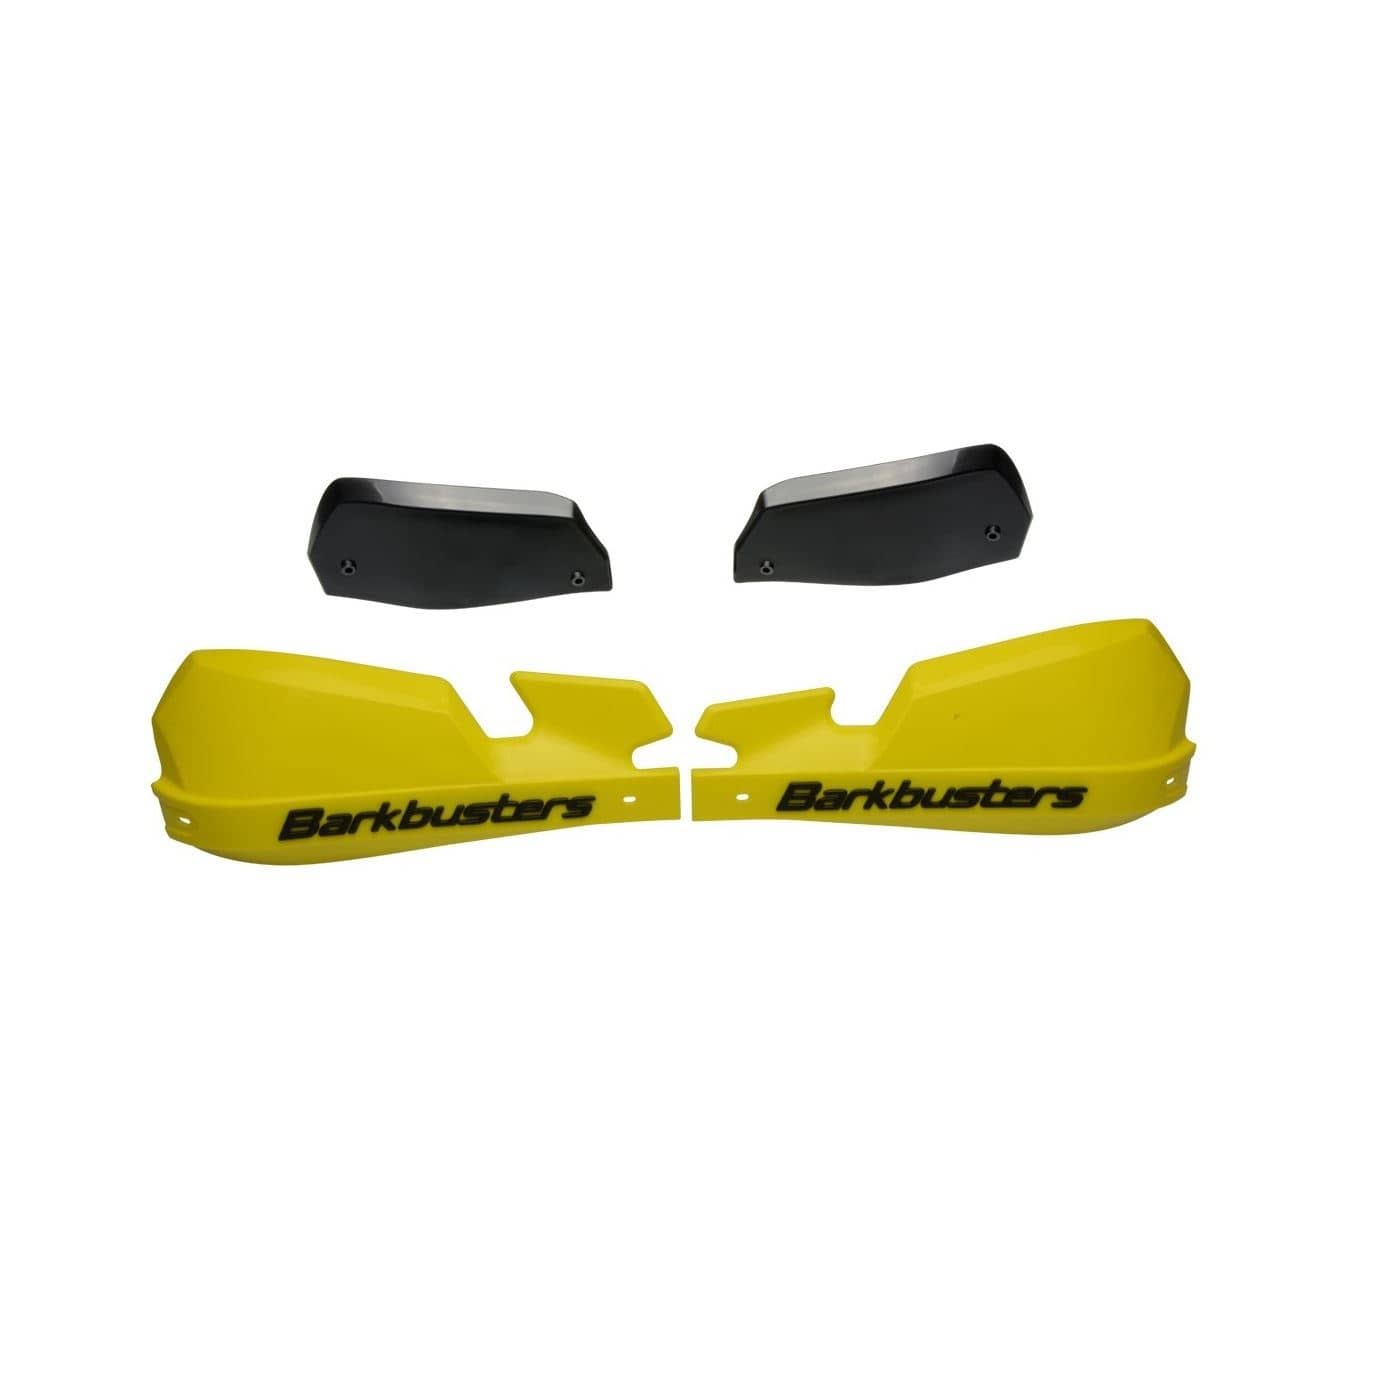 Barkbuster VPS Yellow Handgaurd & Two Point Mount SWM SM 500R 2015 - 2022-BB-BHG-152-00-NP60-B-079-YE